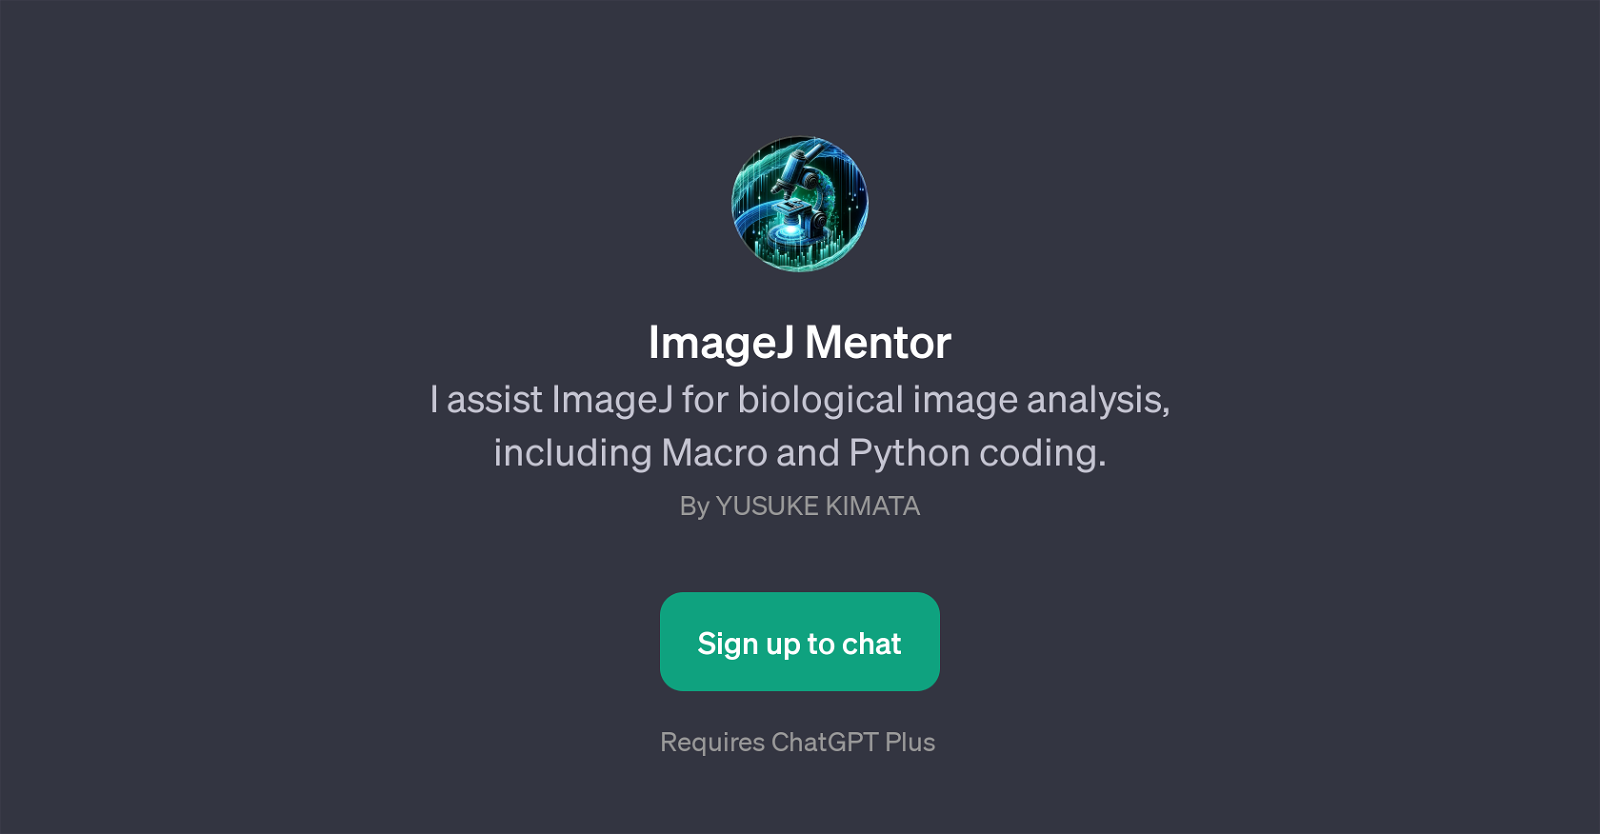 ImageJ Mentor website